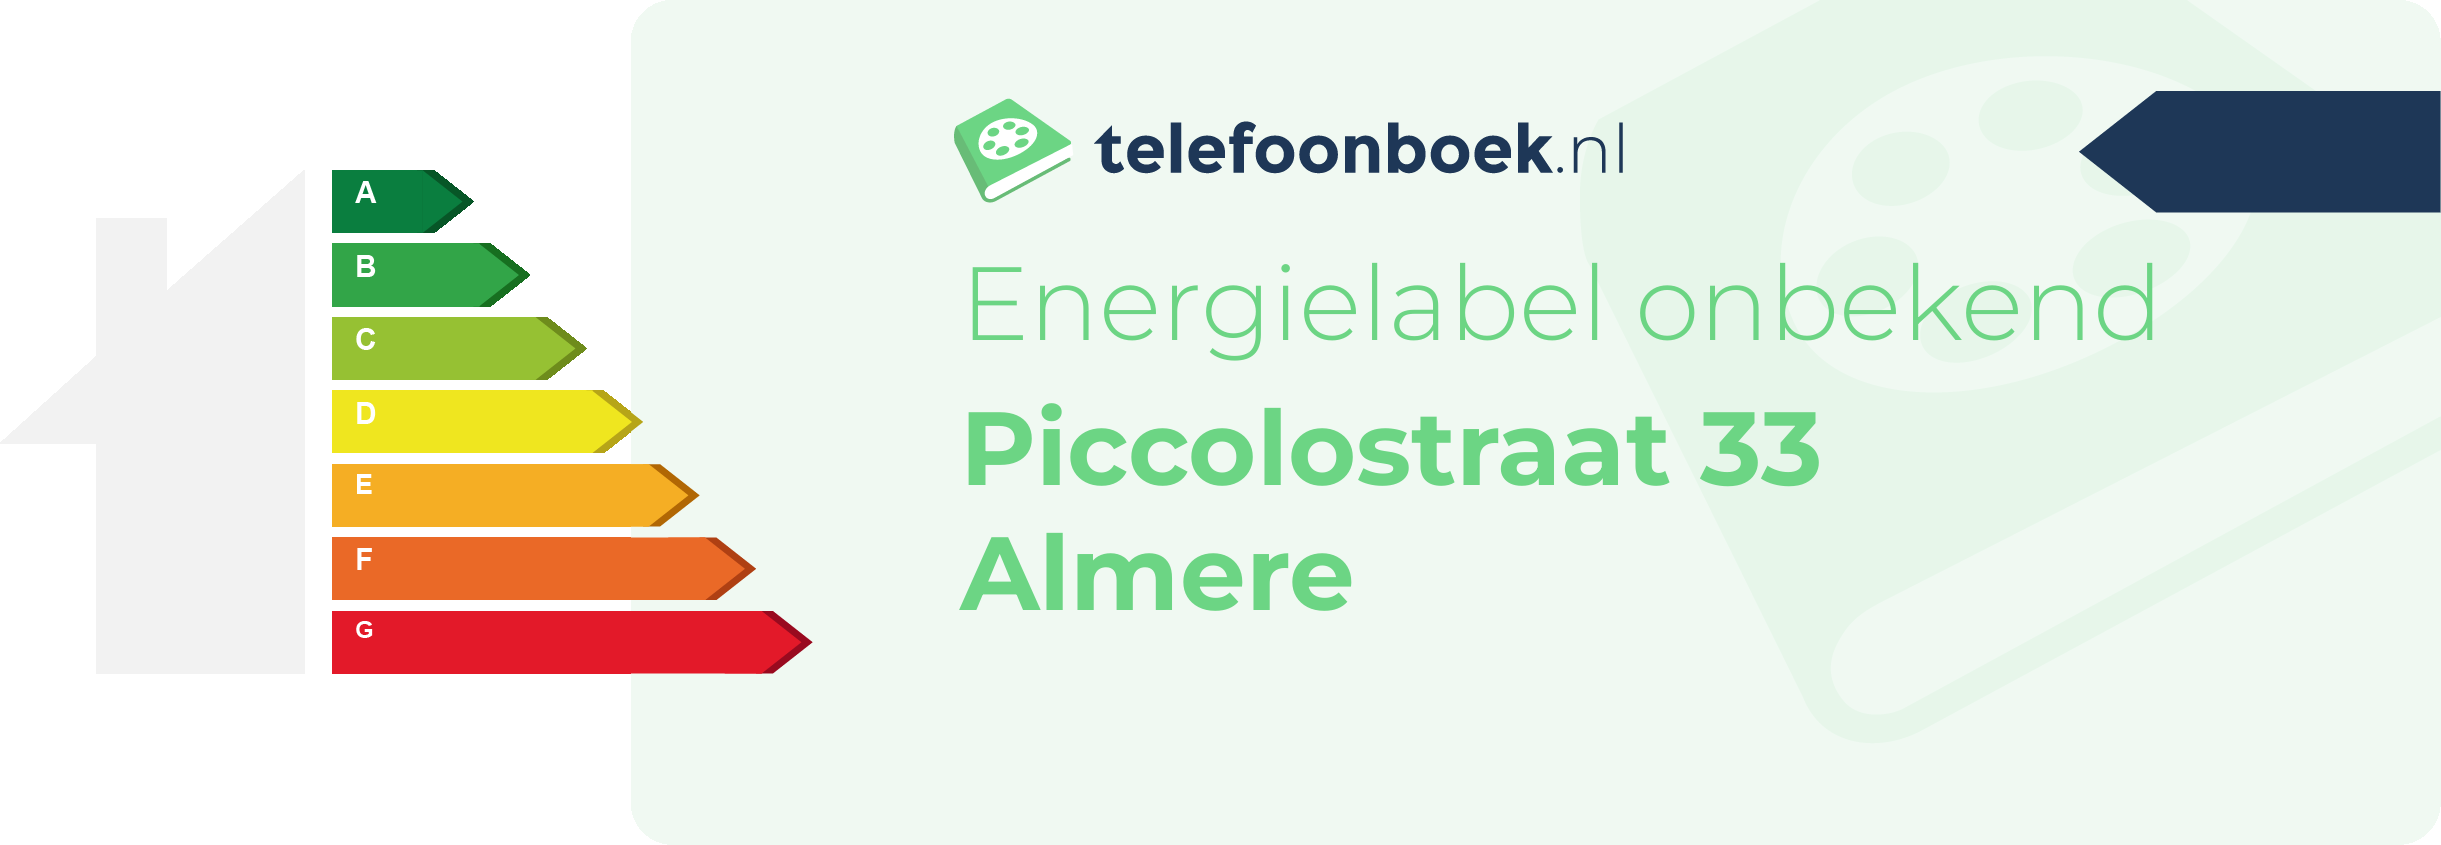 Energielabel Piccolostraat 33 Almere